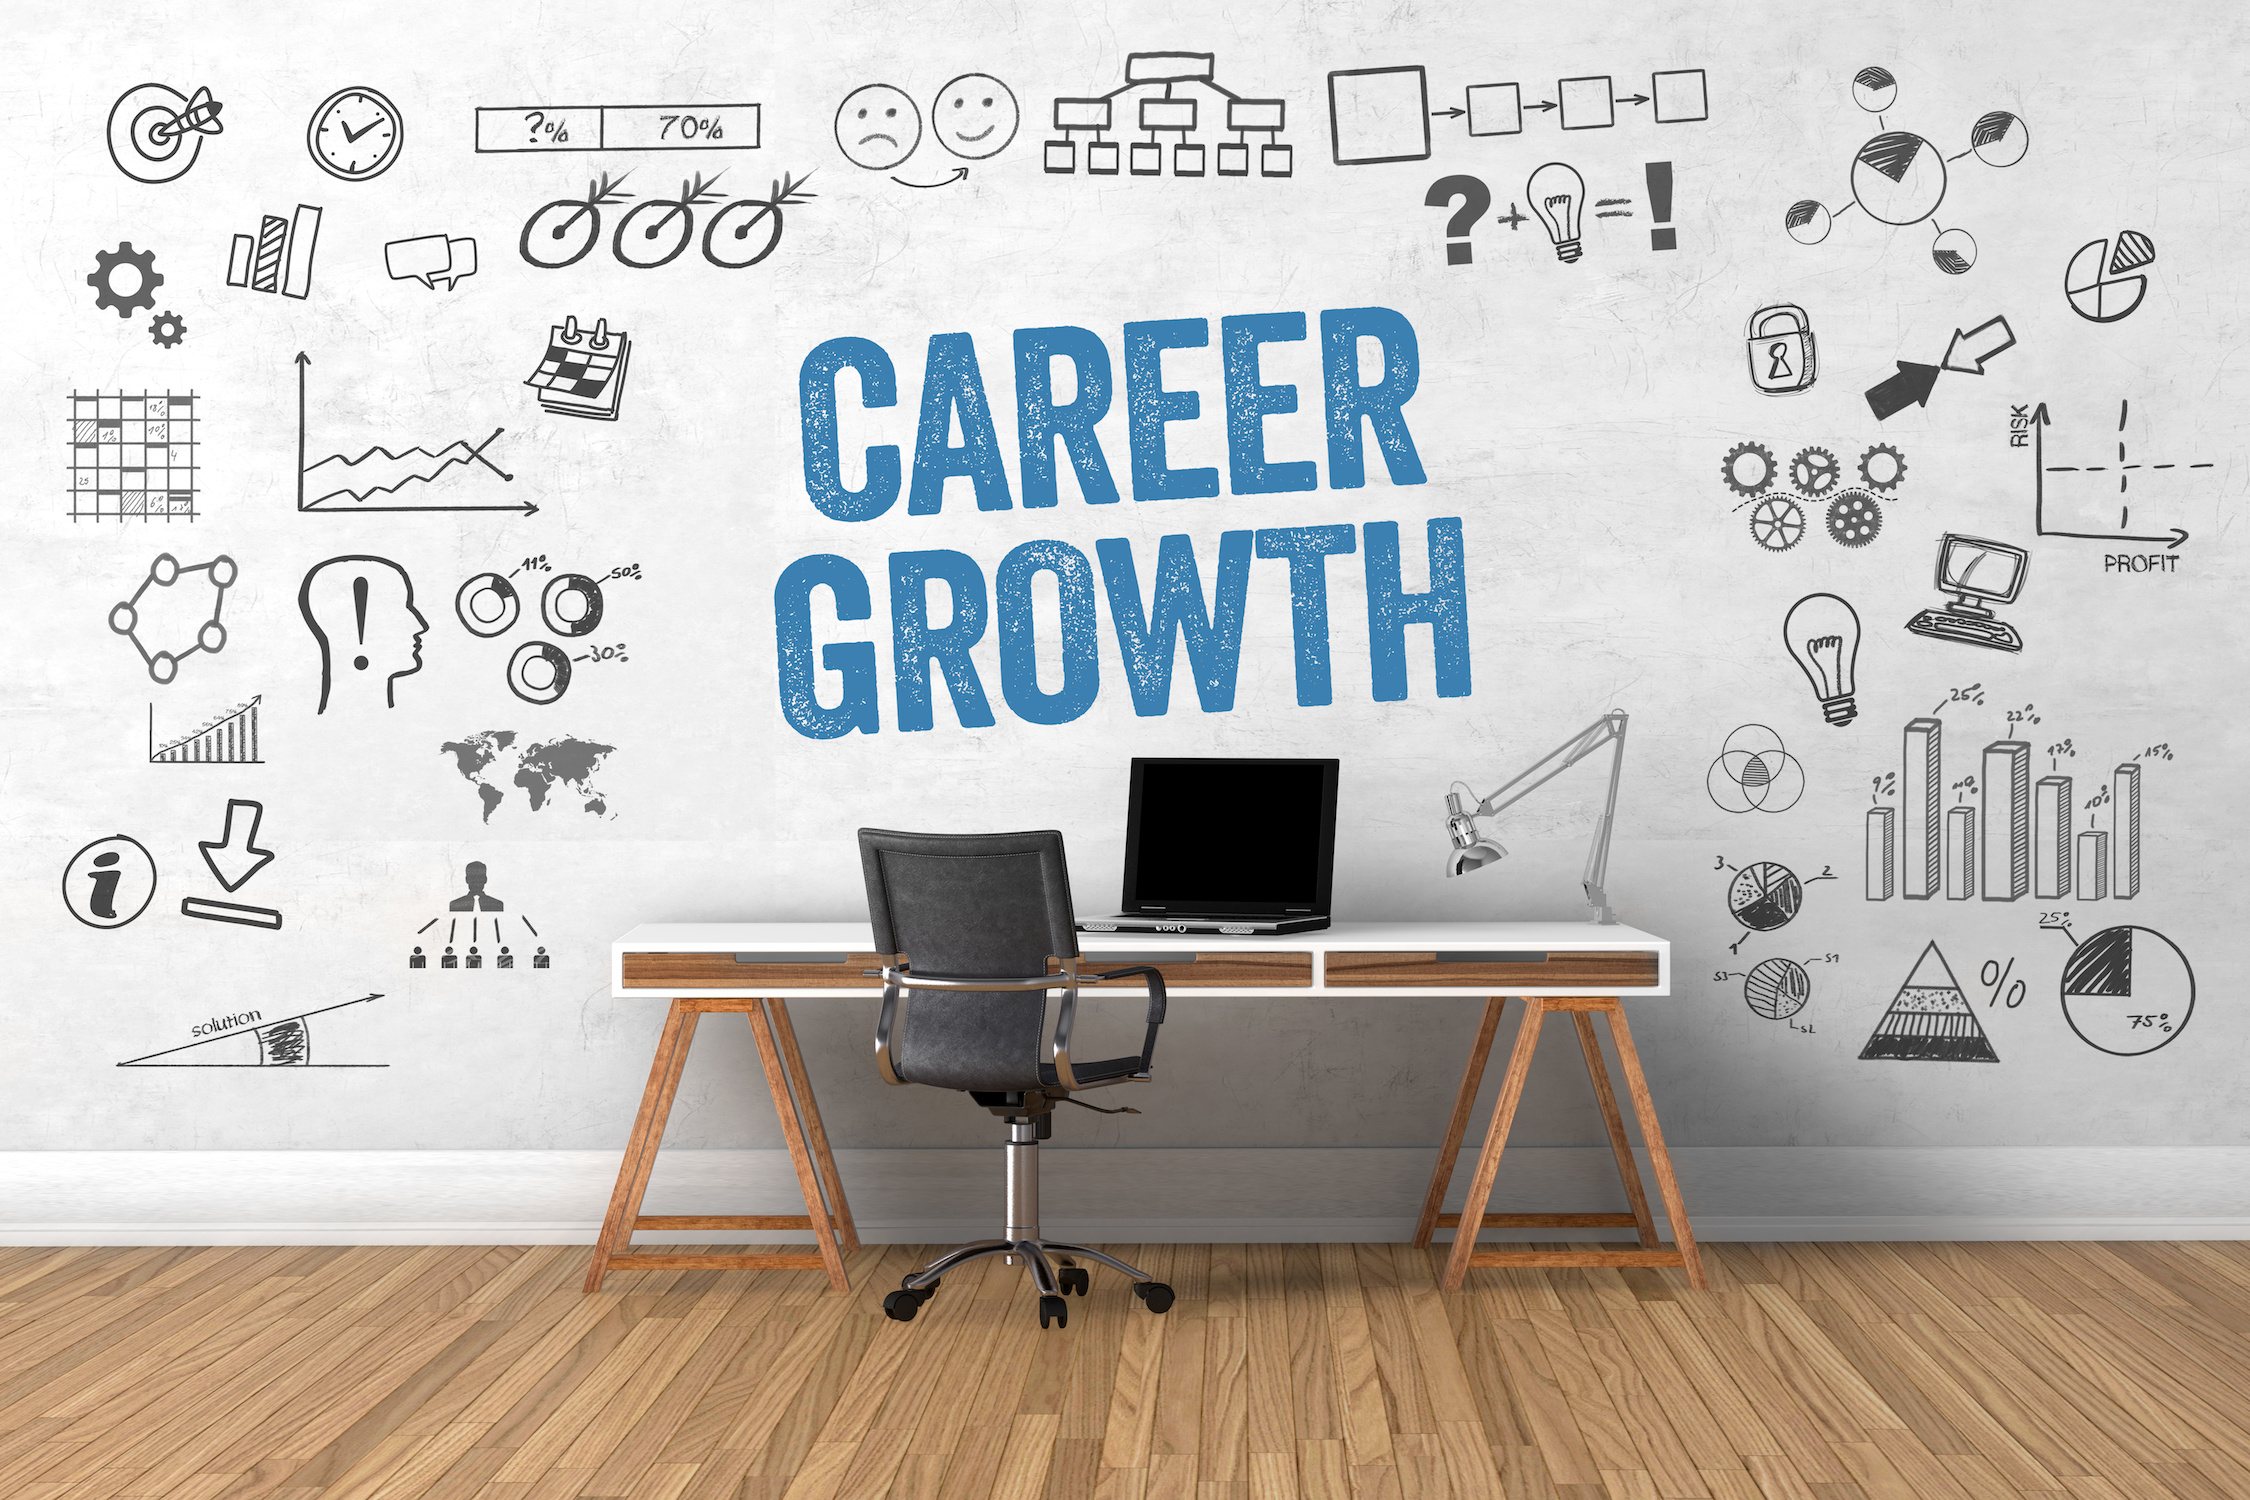 Career_growth_image